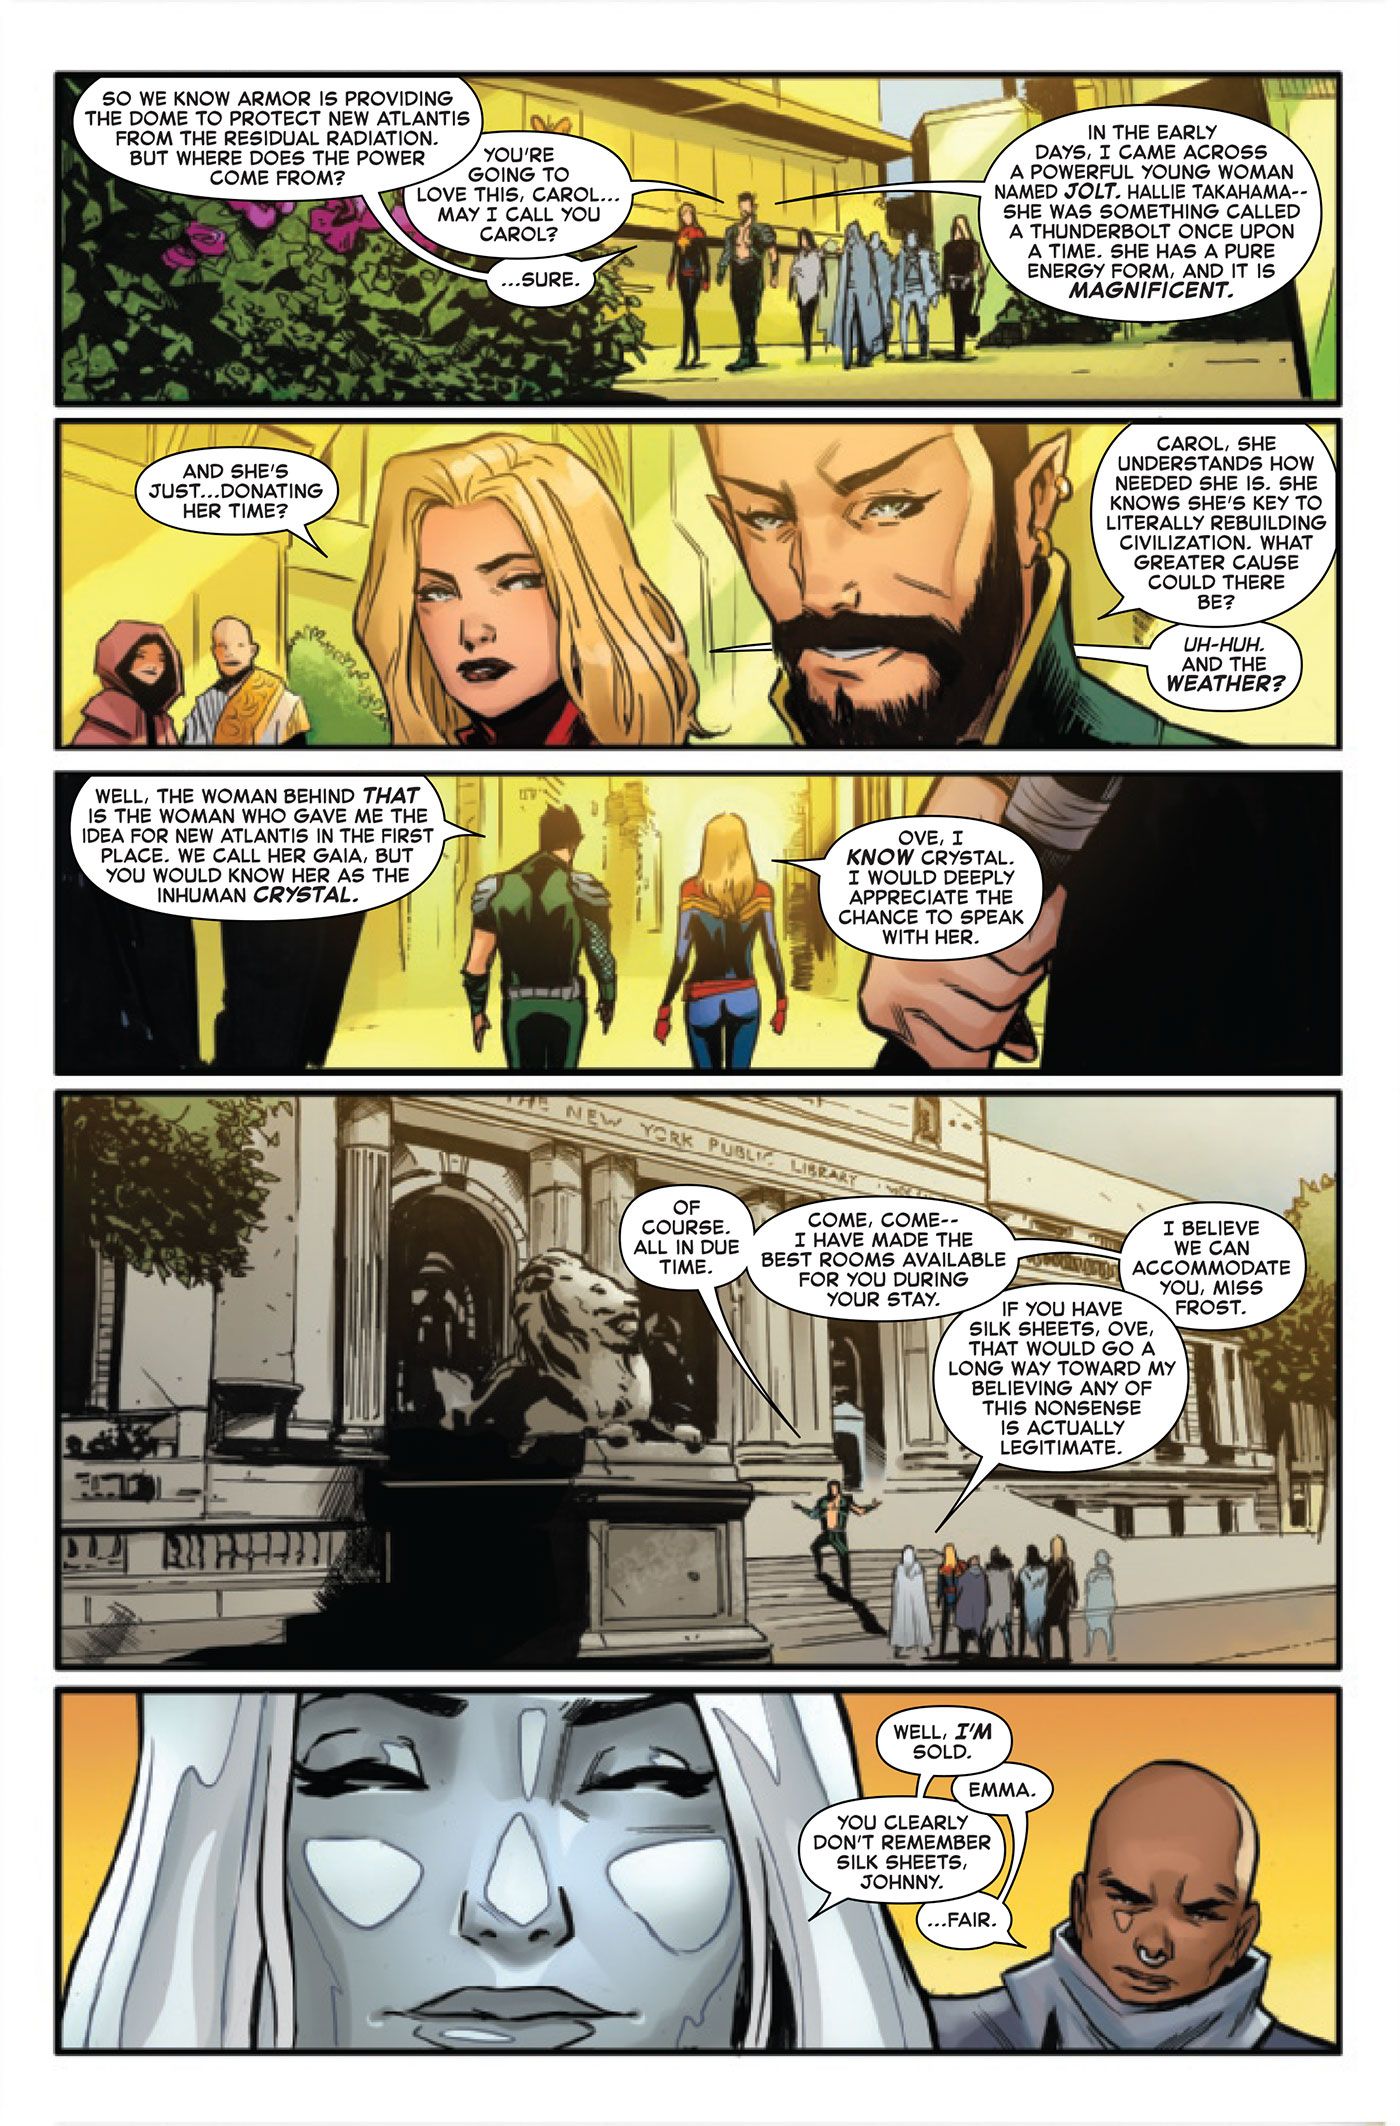 PREVIEW: Captain Marvel #24